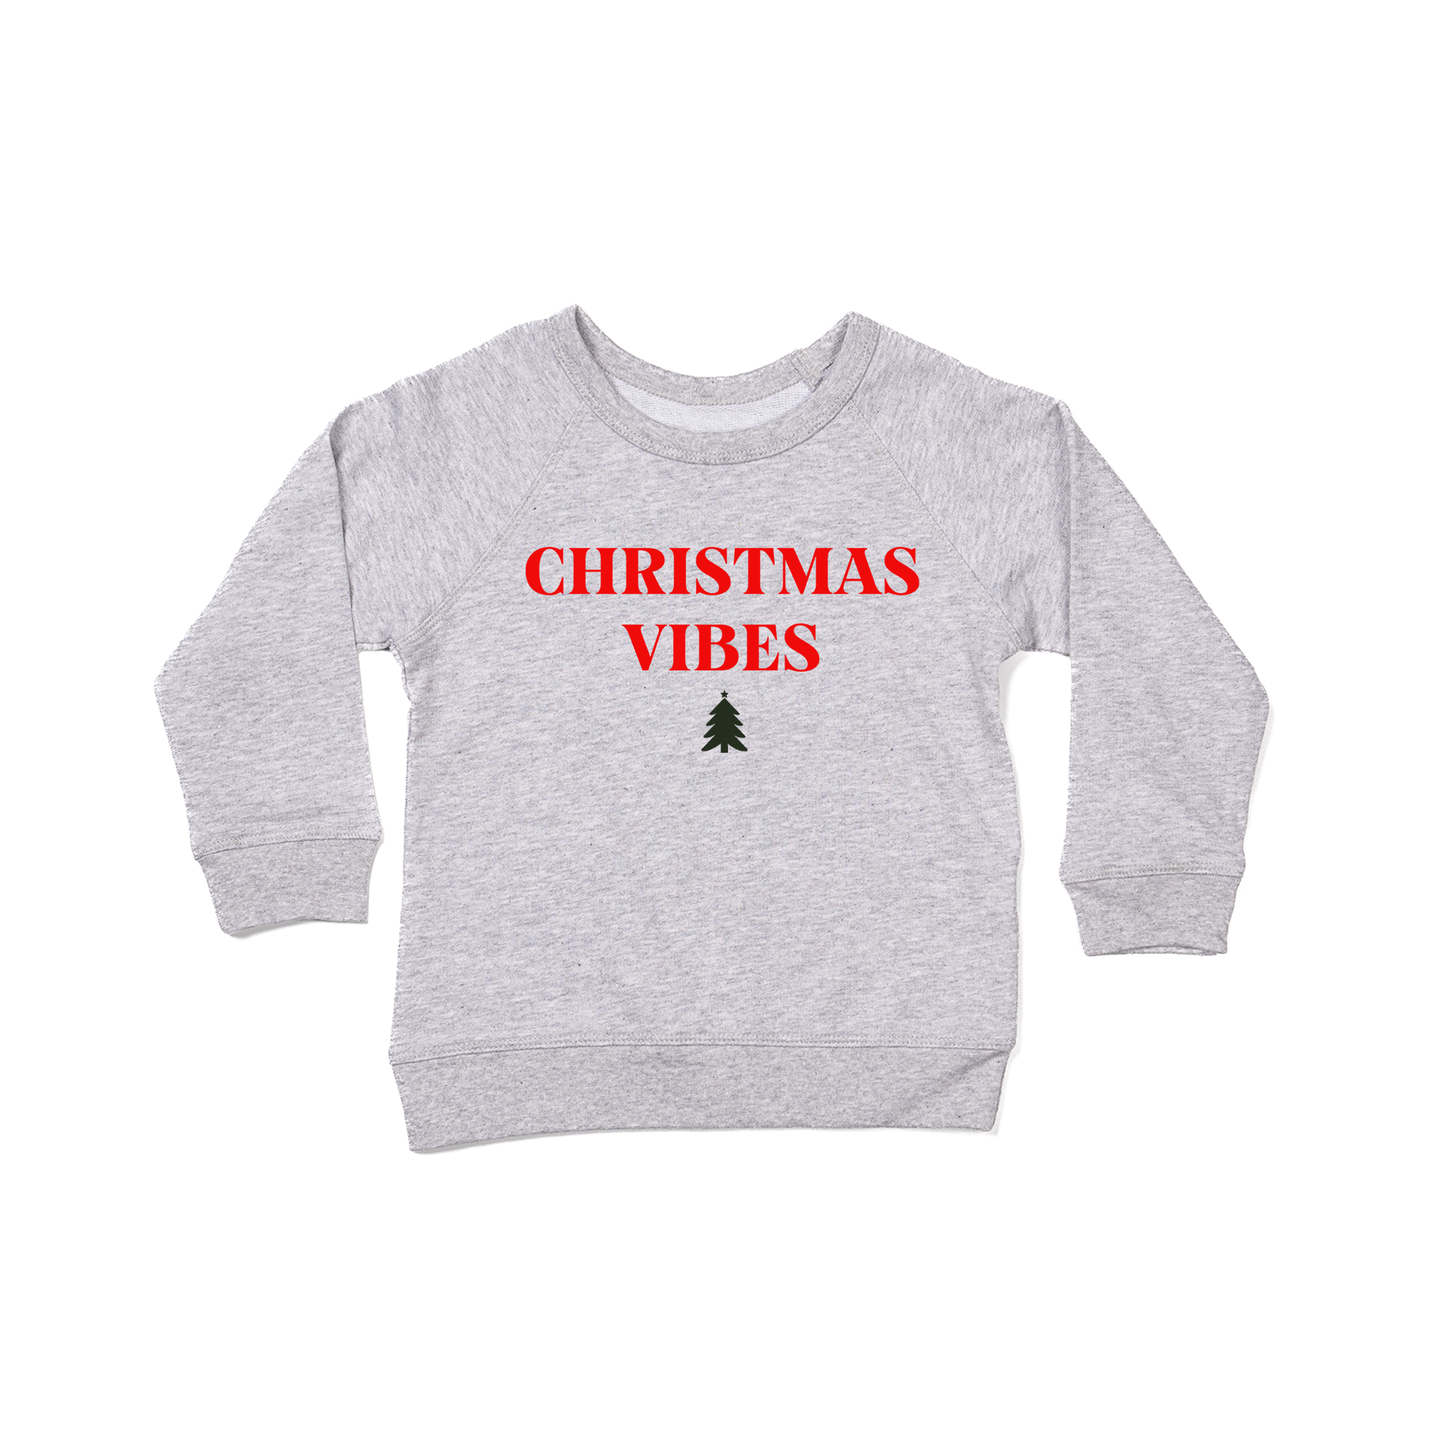 Christmas Vibes - Kids Sweatshirt (Heather Gray)